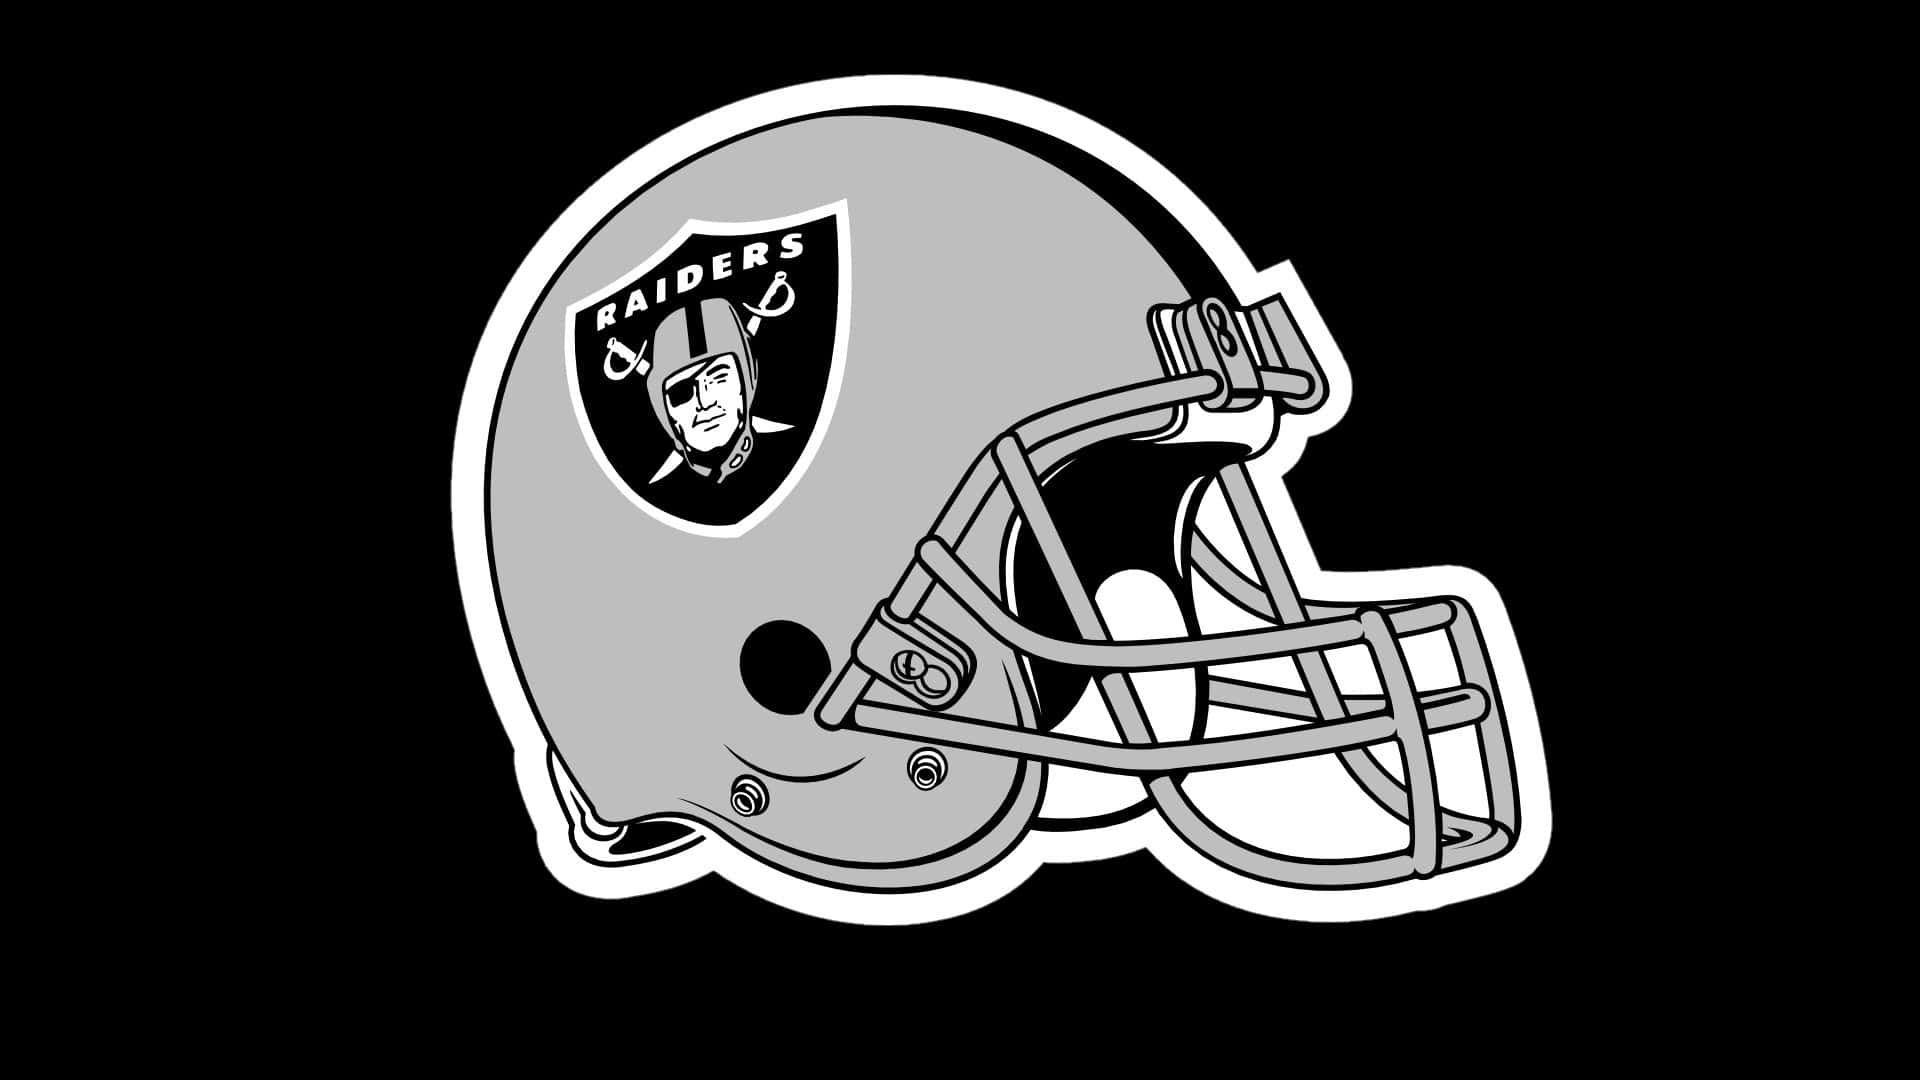 Raiders Football Helmet Graphic Wallpaper